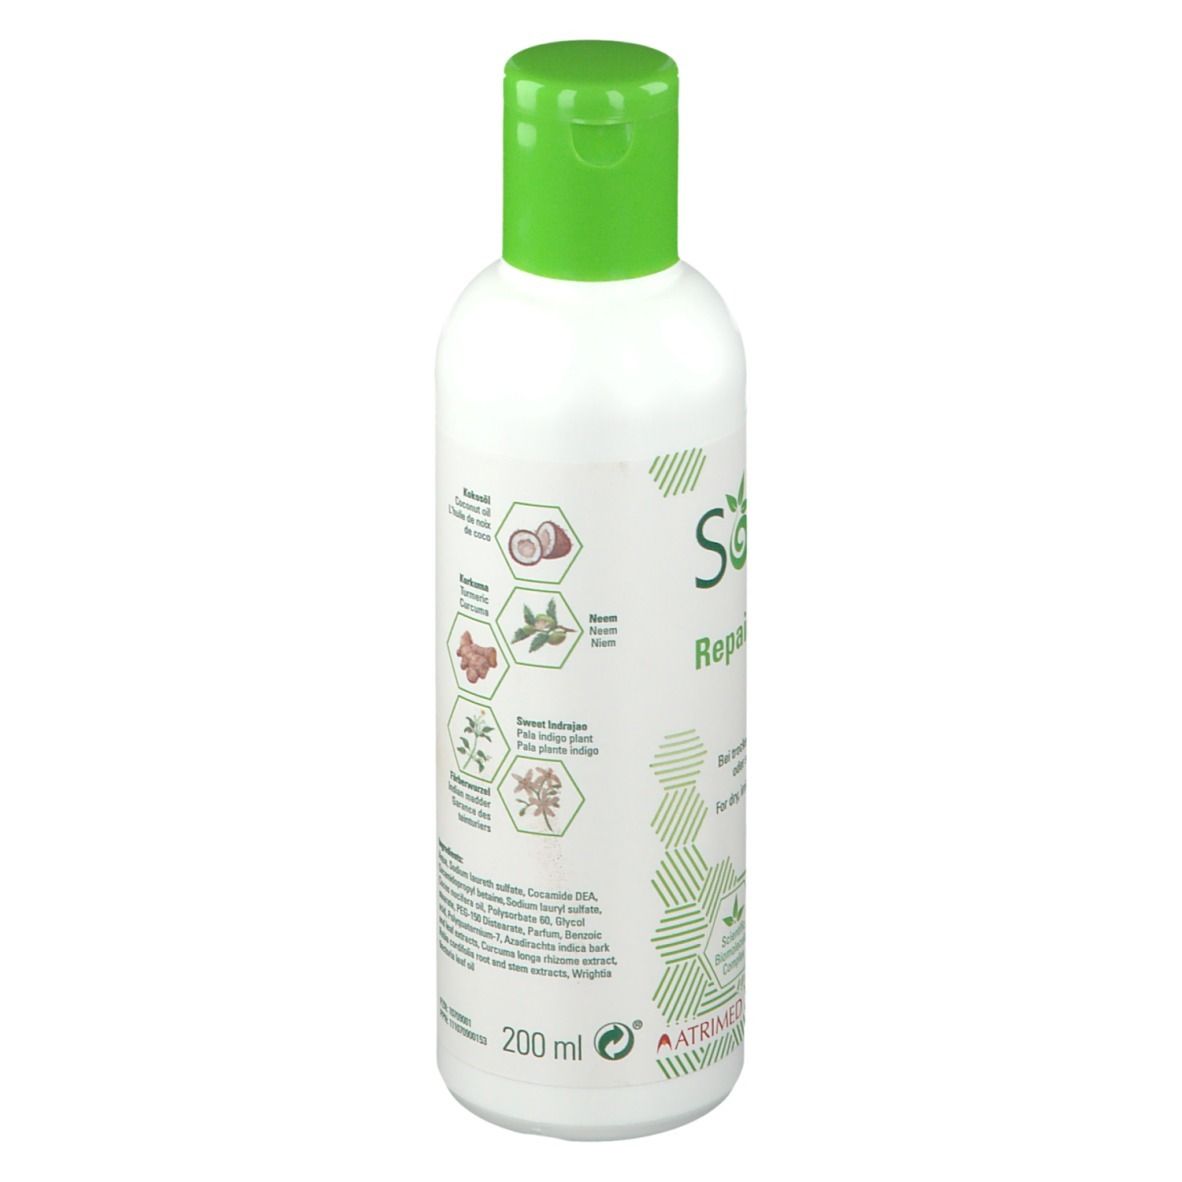 Sorion® Repair Shampoo